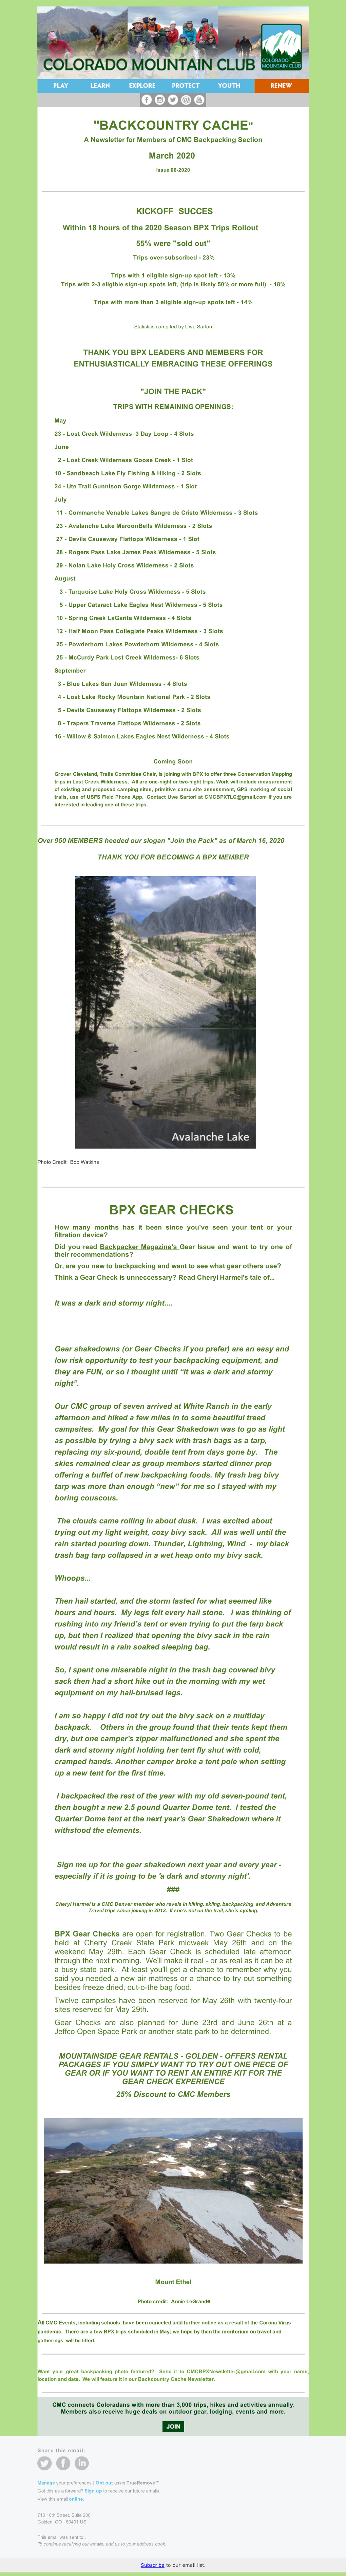 "Backcountry Cache" Bpx Gear Checks